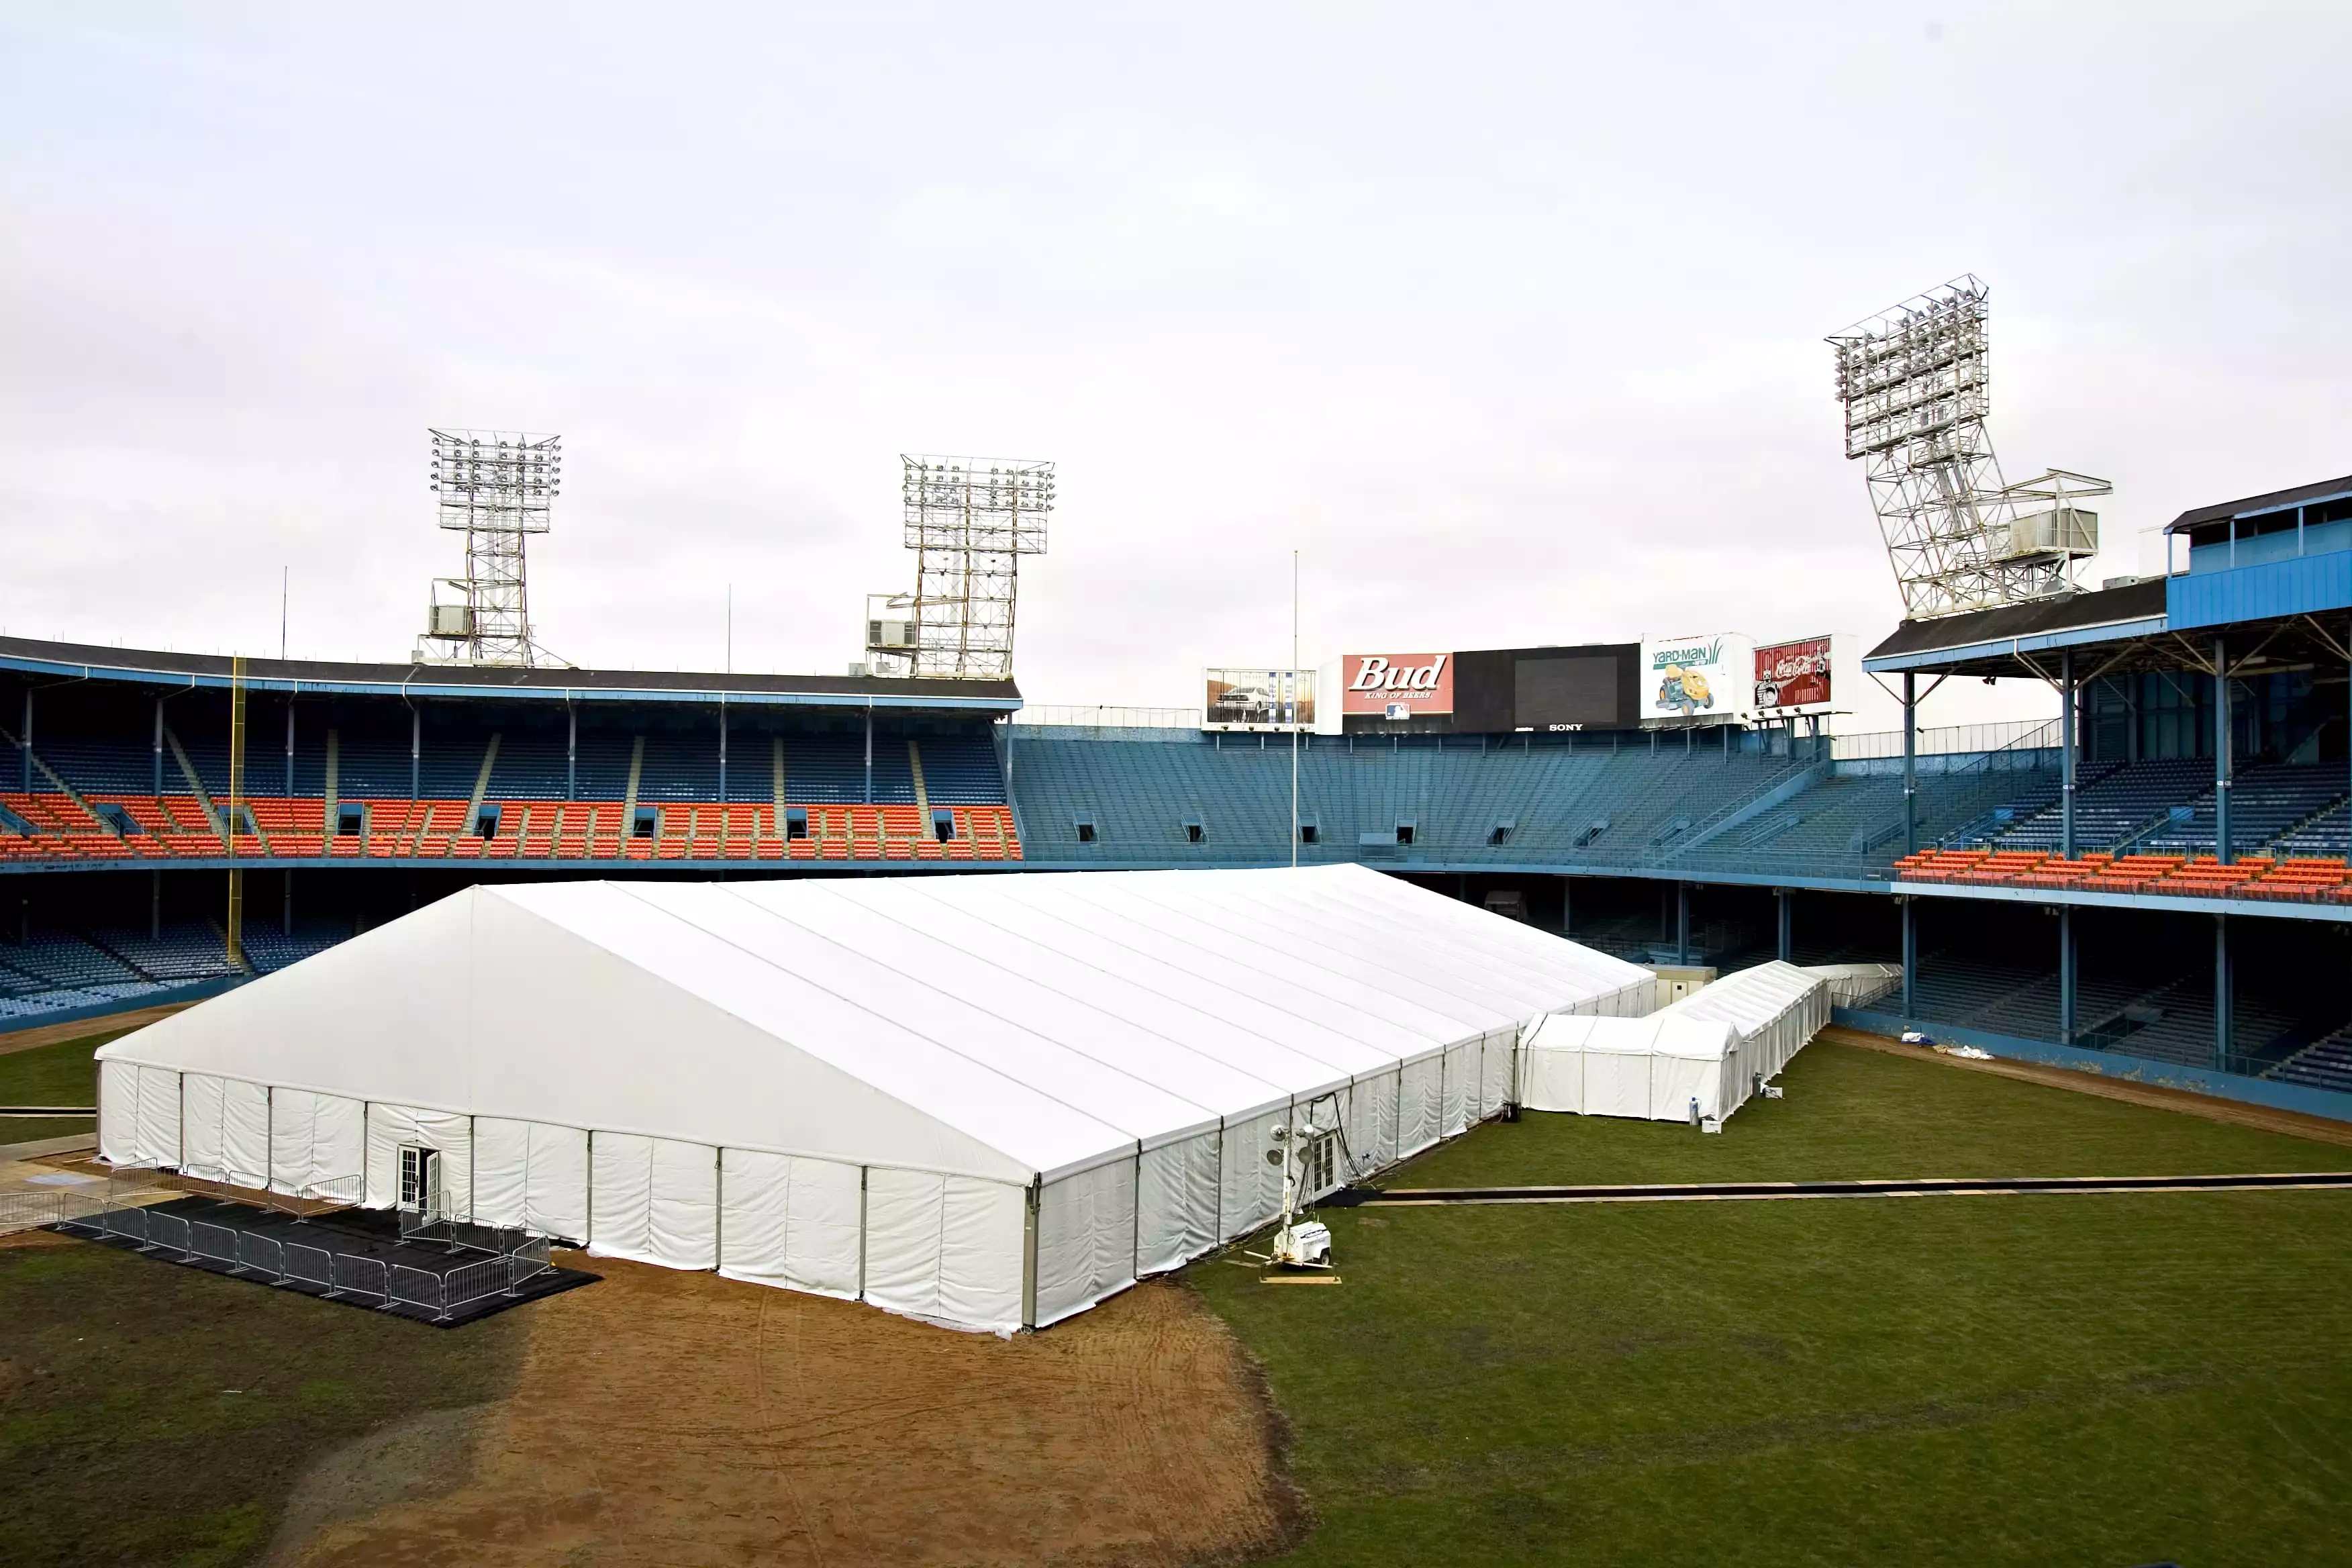 Bud Bowl Large Tent Rental At The Super Bowl | American Pavilion